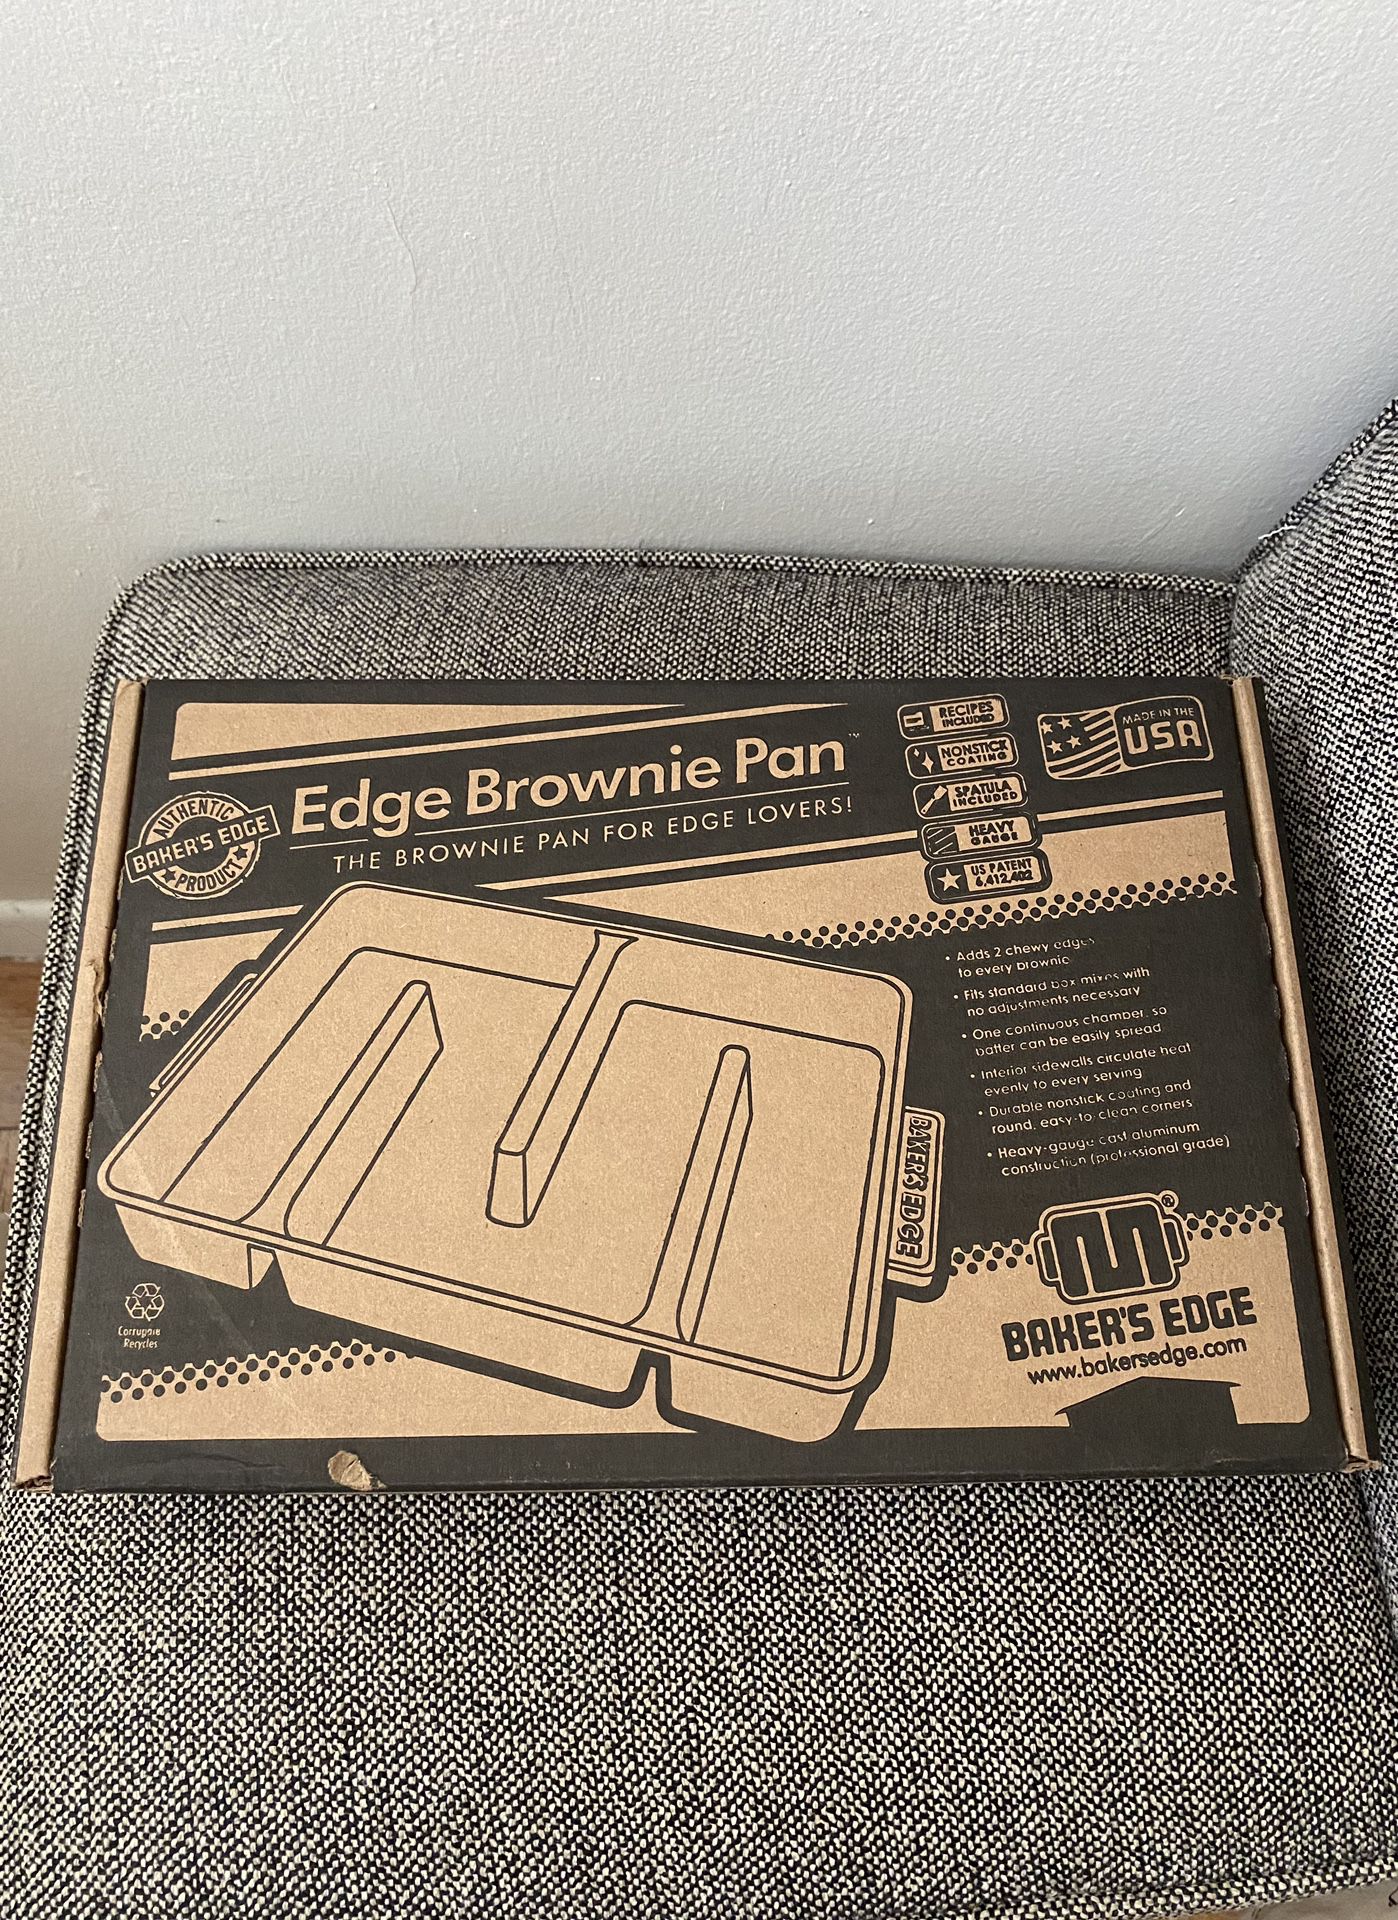 Edge Brownie Pan for edge lovers 